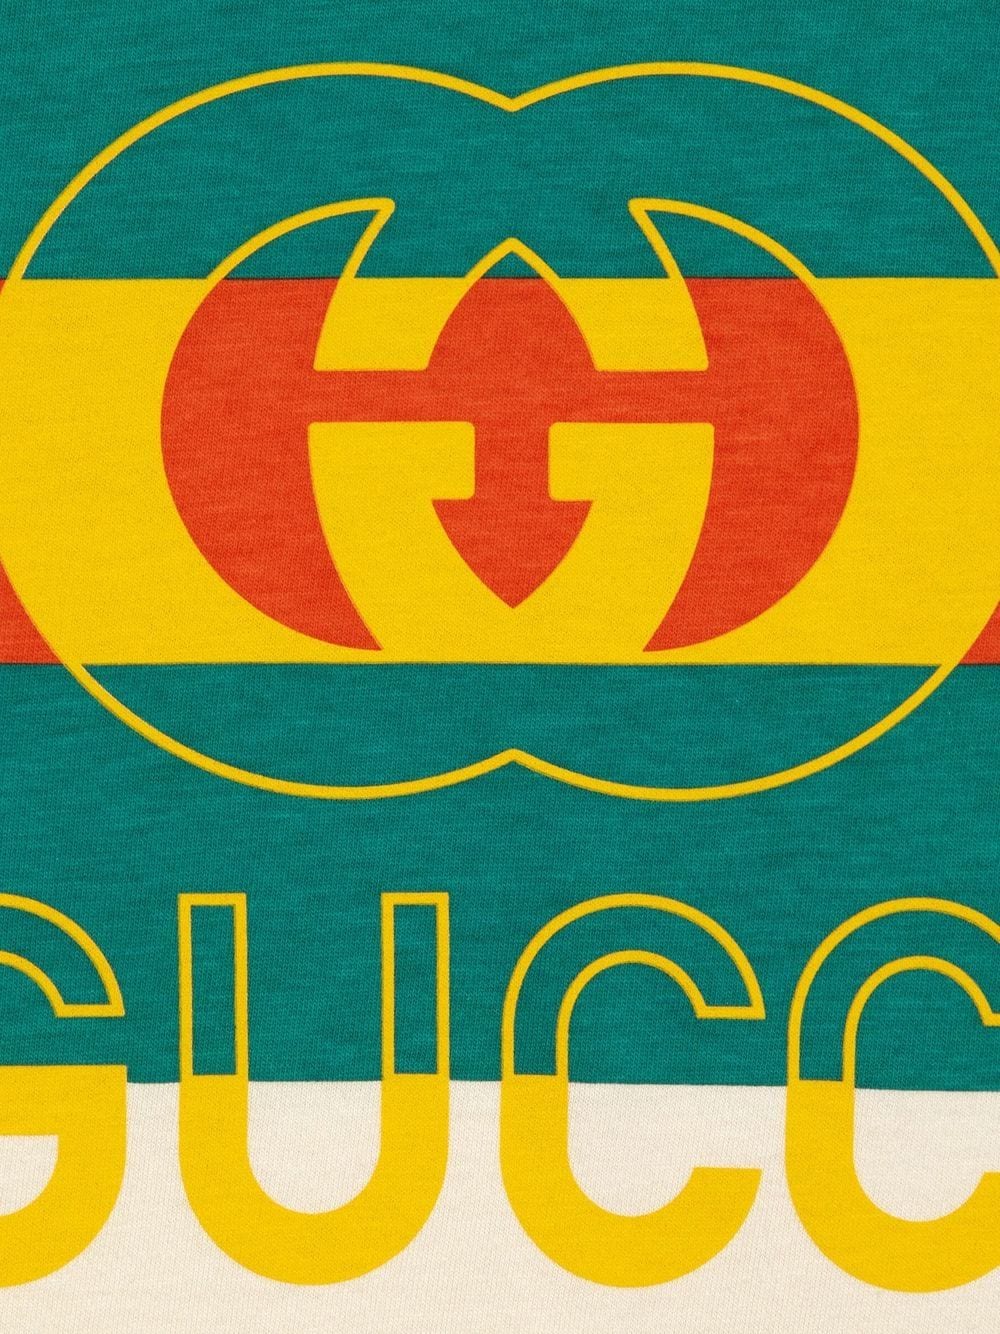 Gucci Kids t-shirt with logo